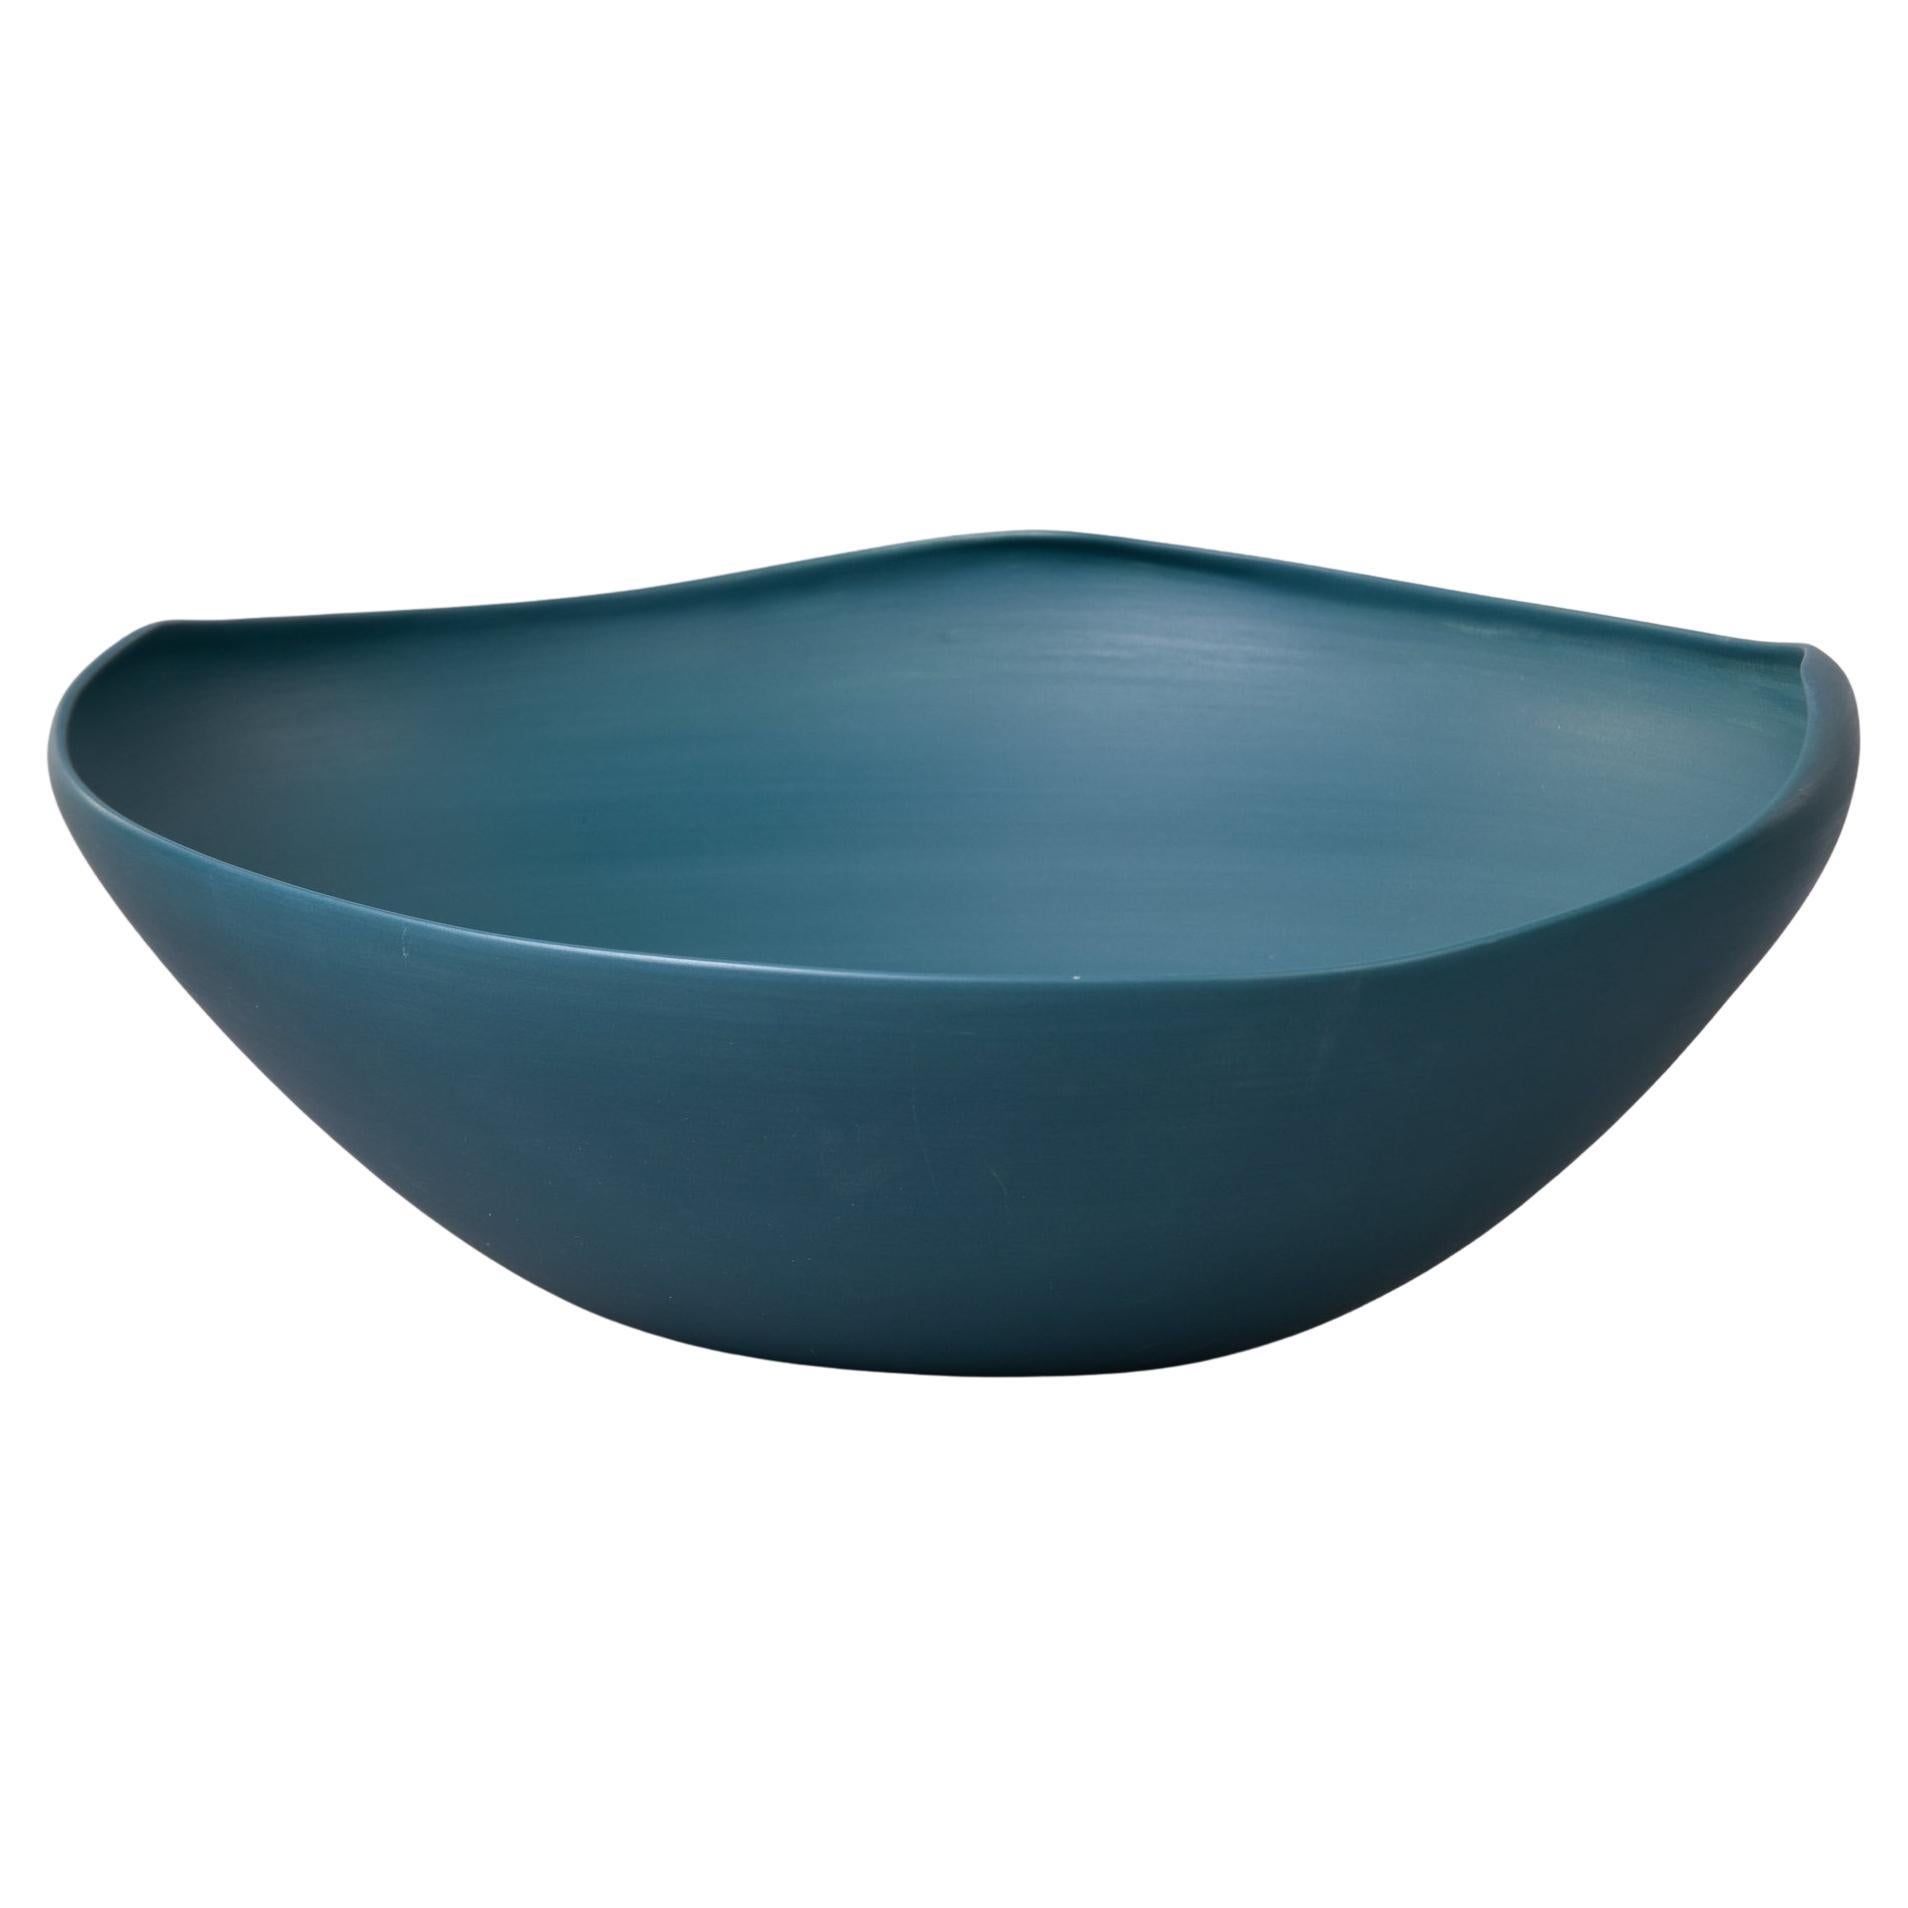 New Rina Menardi Medium Conchglia Bowl in Mint For Sale